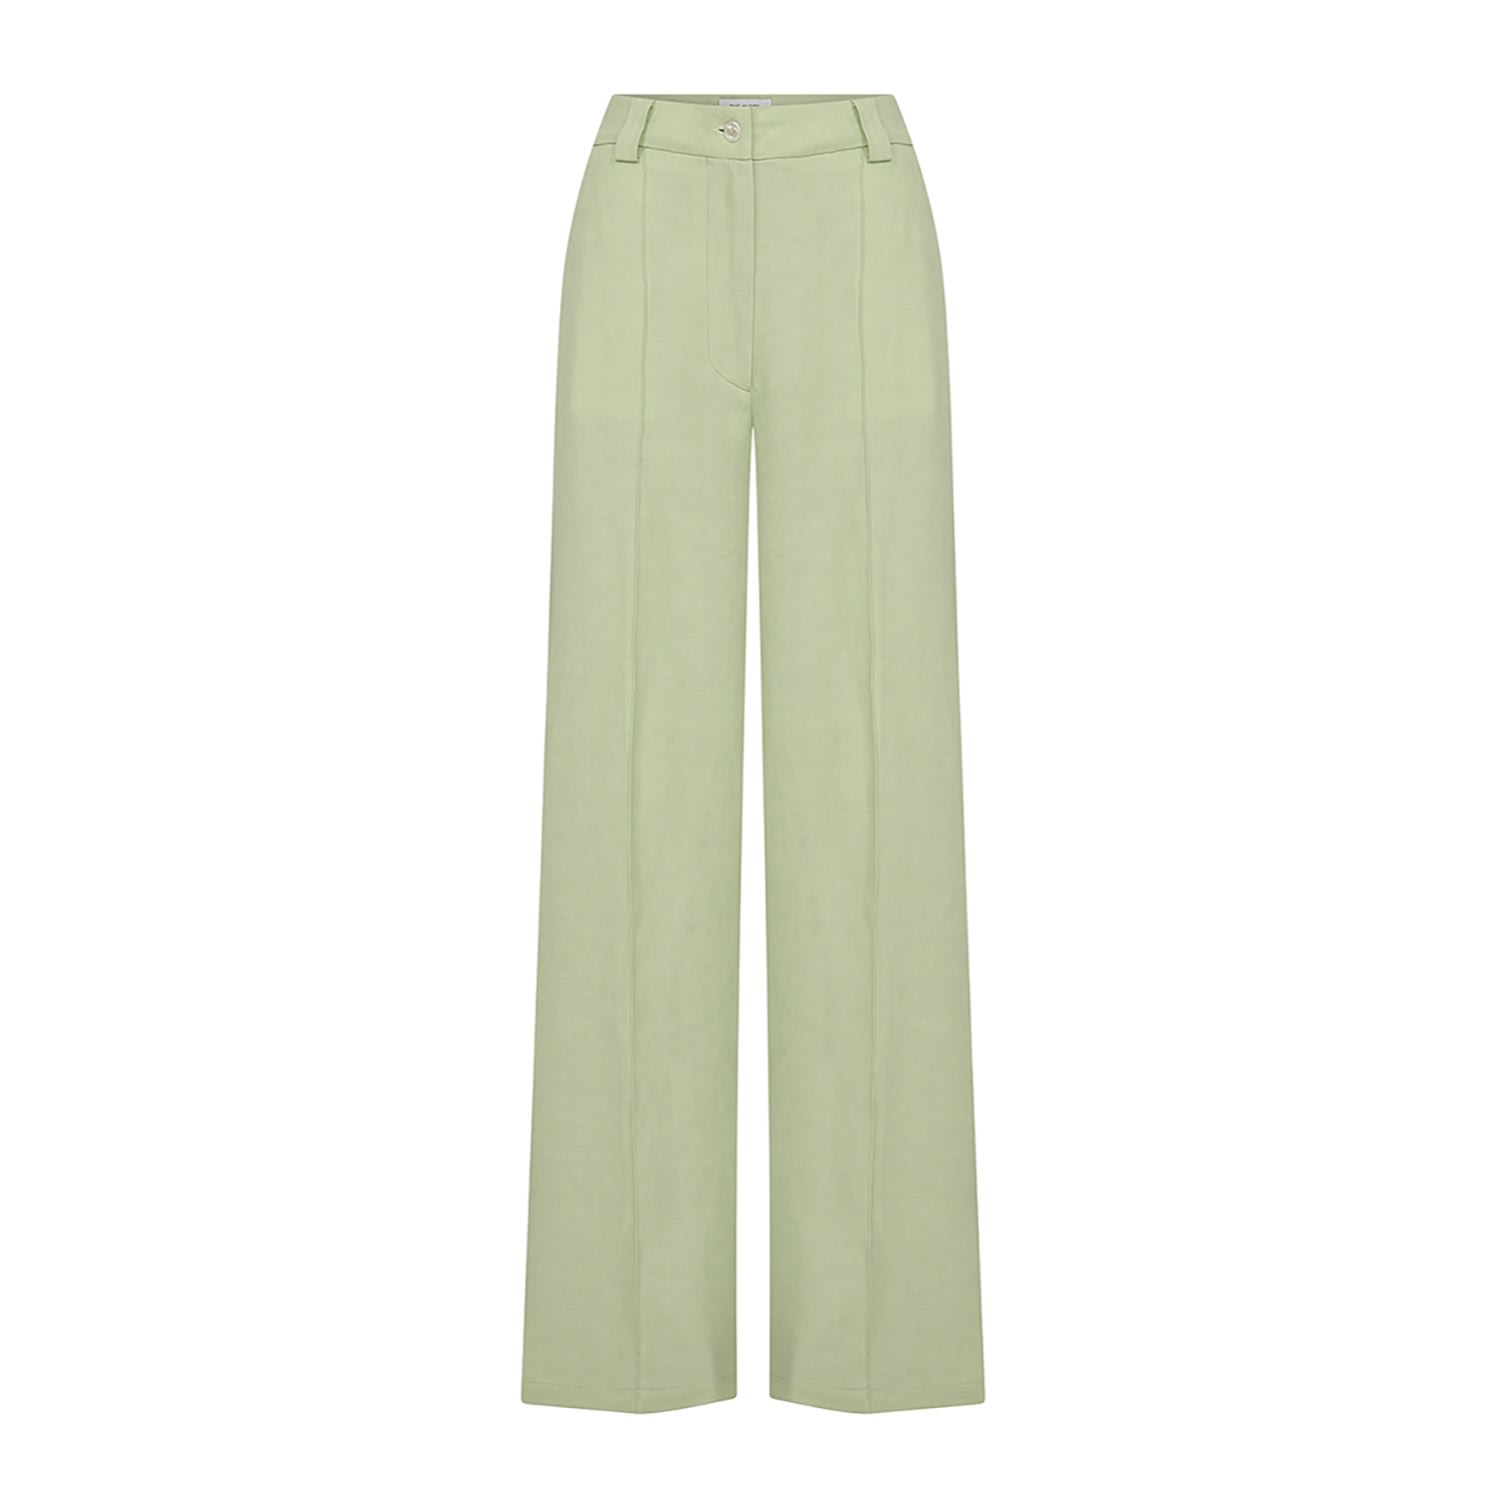 Women’s Pants Lie-In In Green Medium The Alors